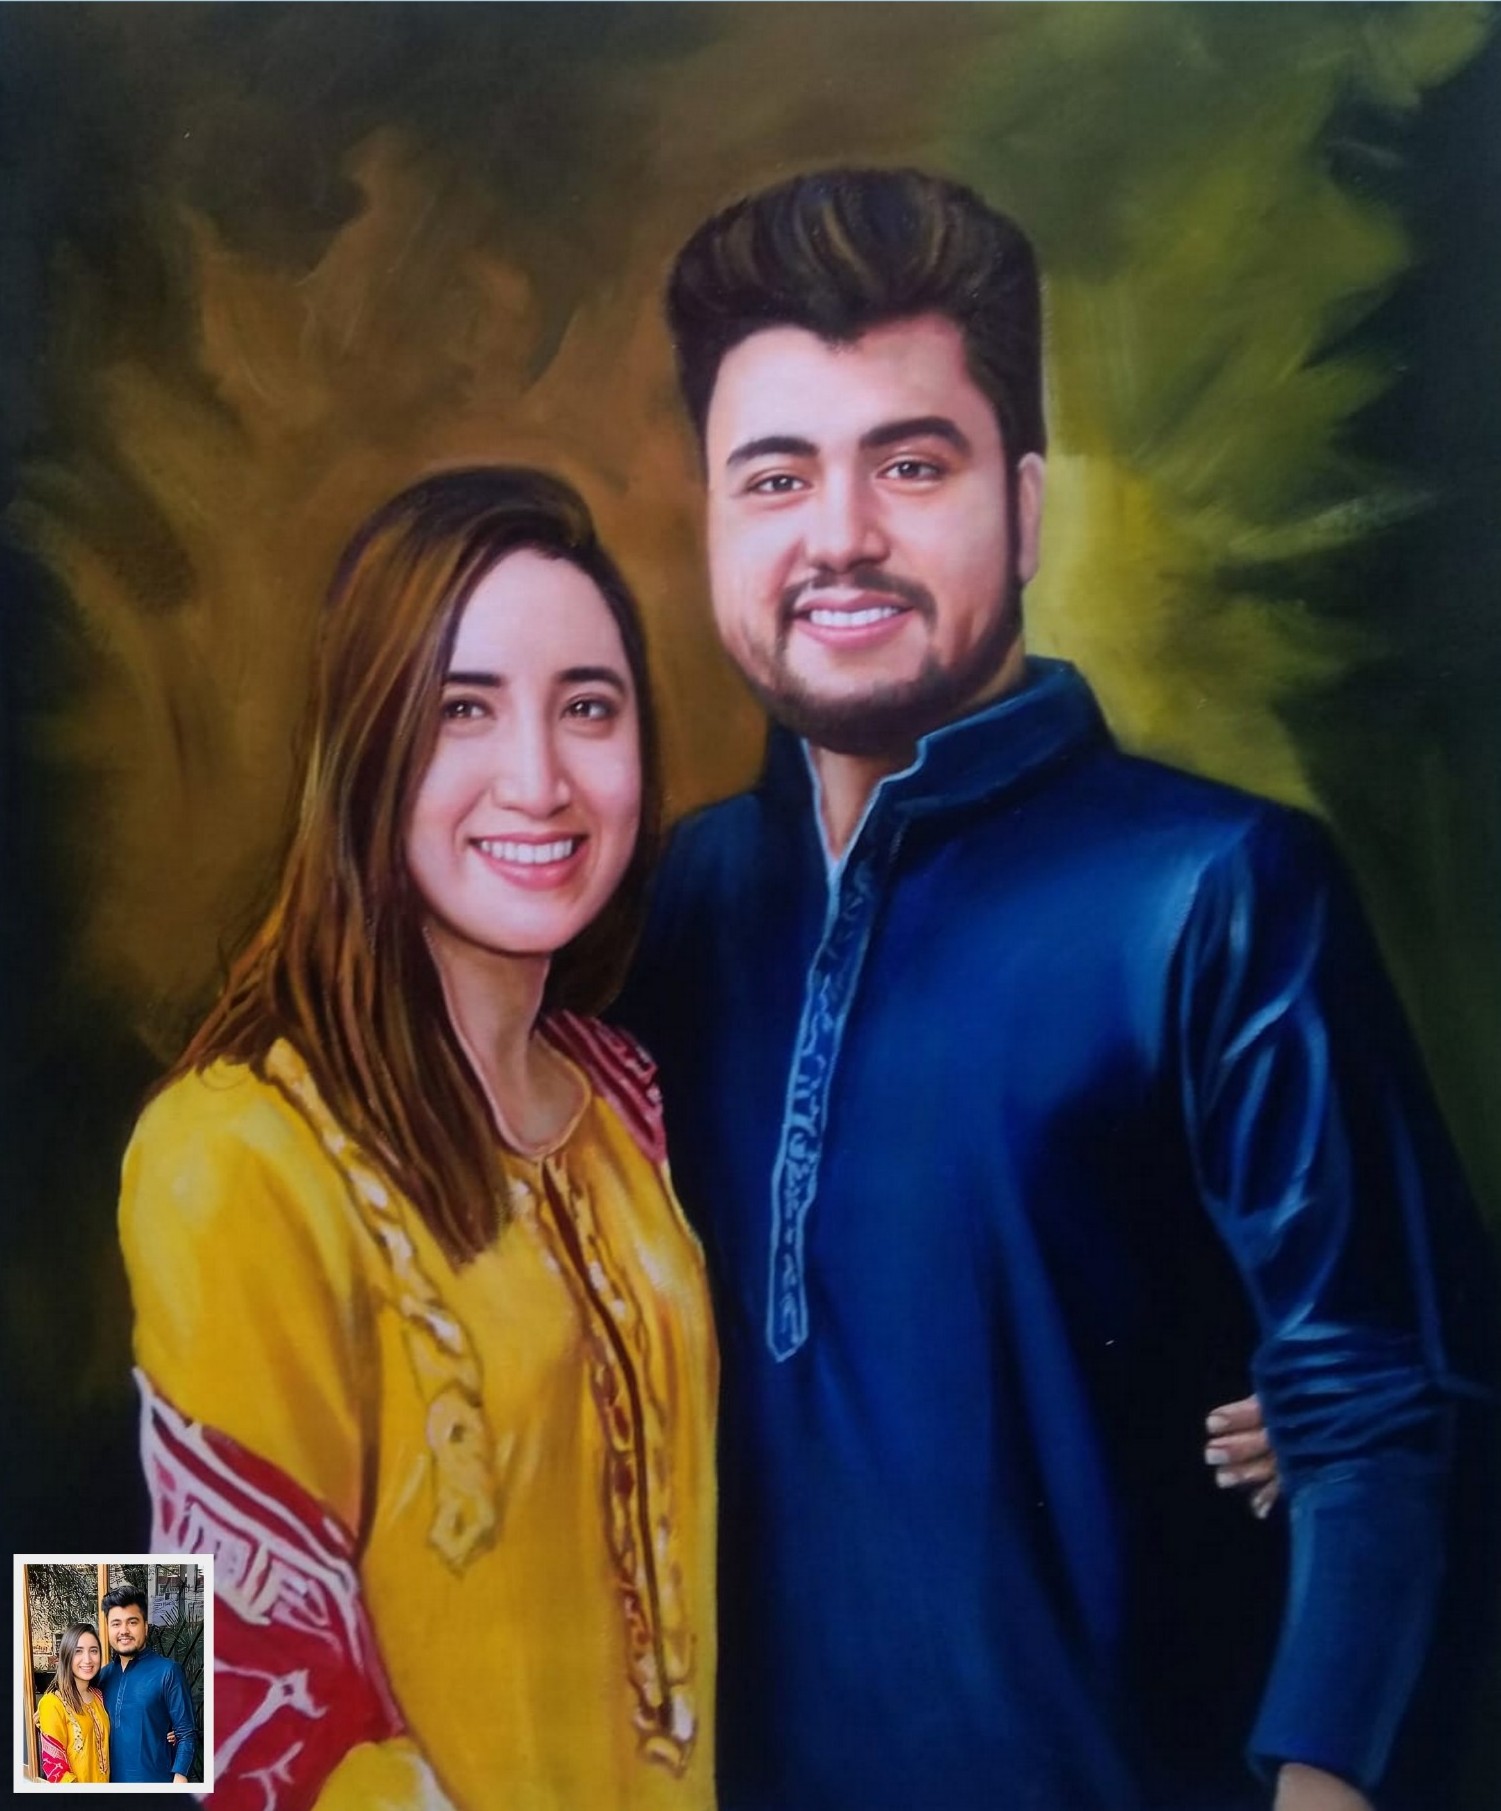 young couple portrait painting, smiling couple portrait, painting from photo, photo to painting, art